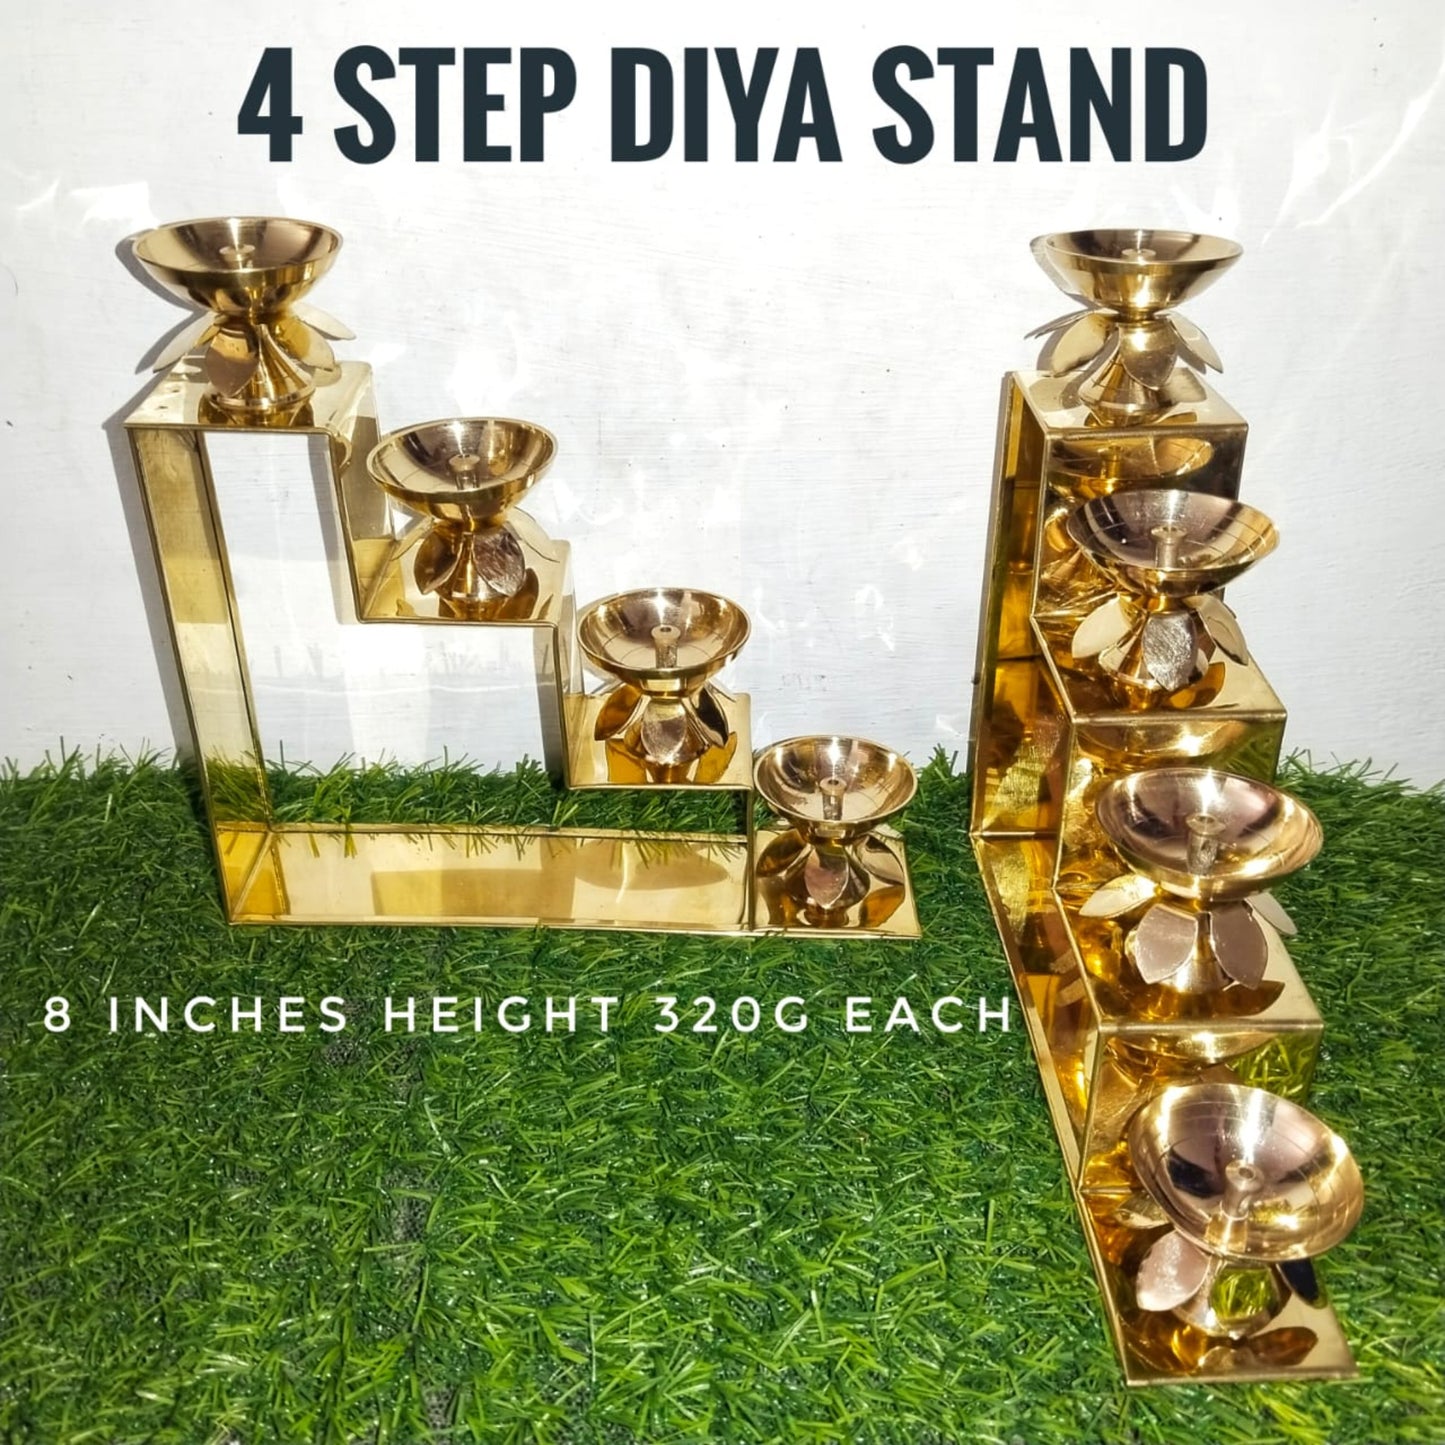 Brass Steps Diyas Stands in Pair